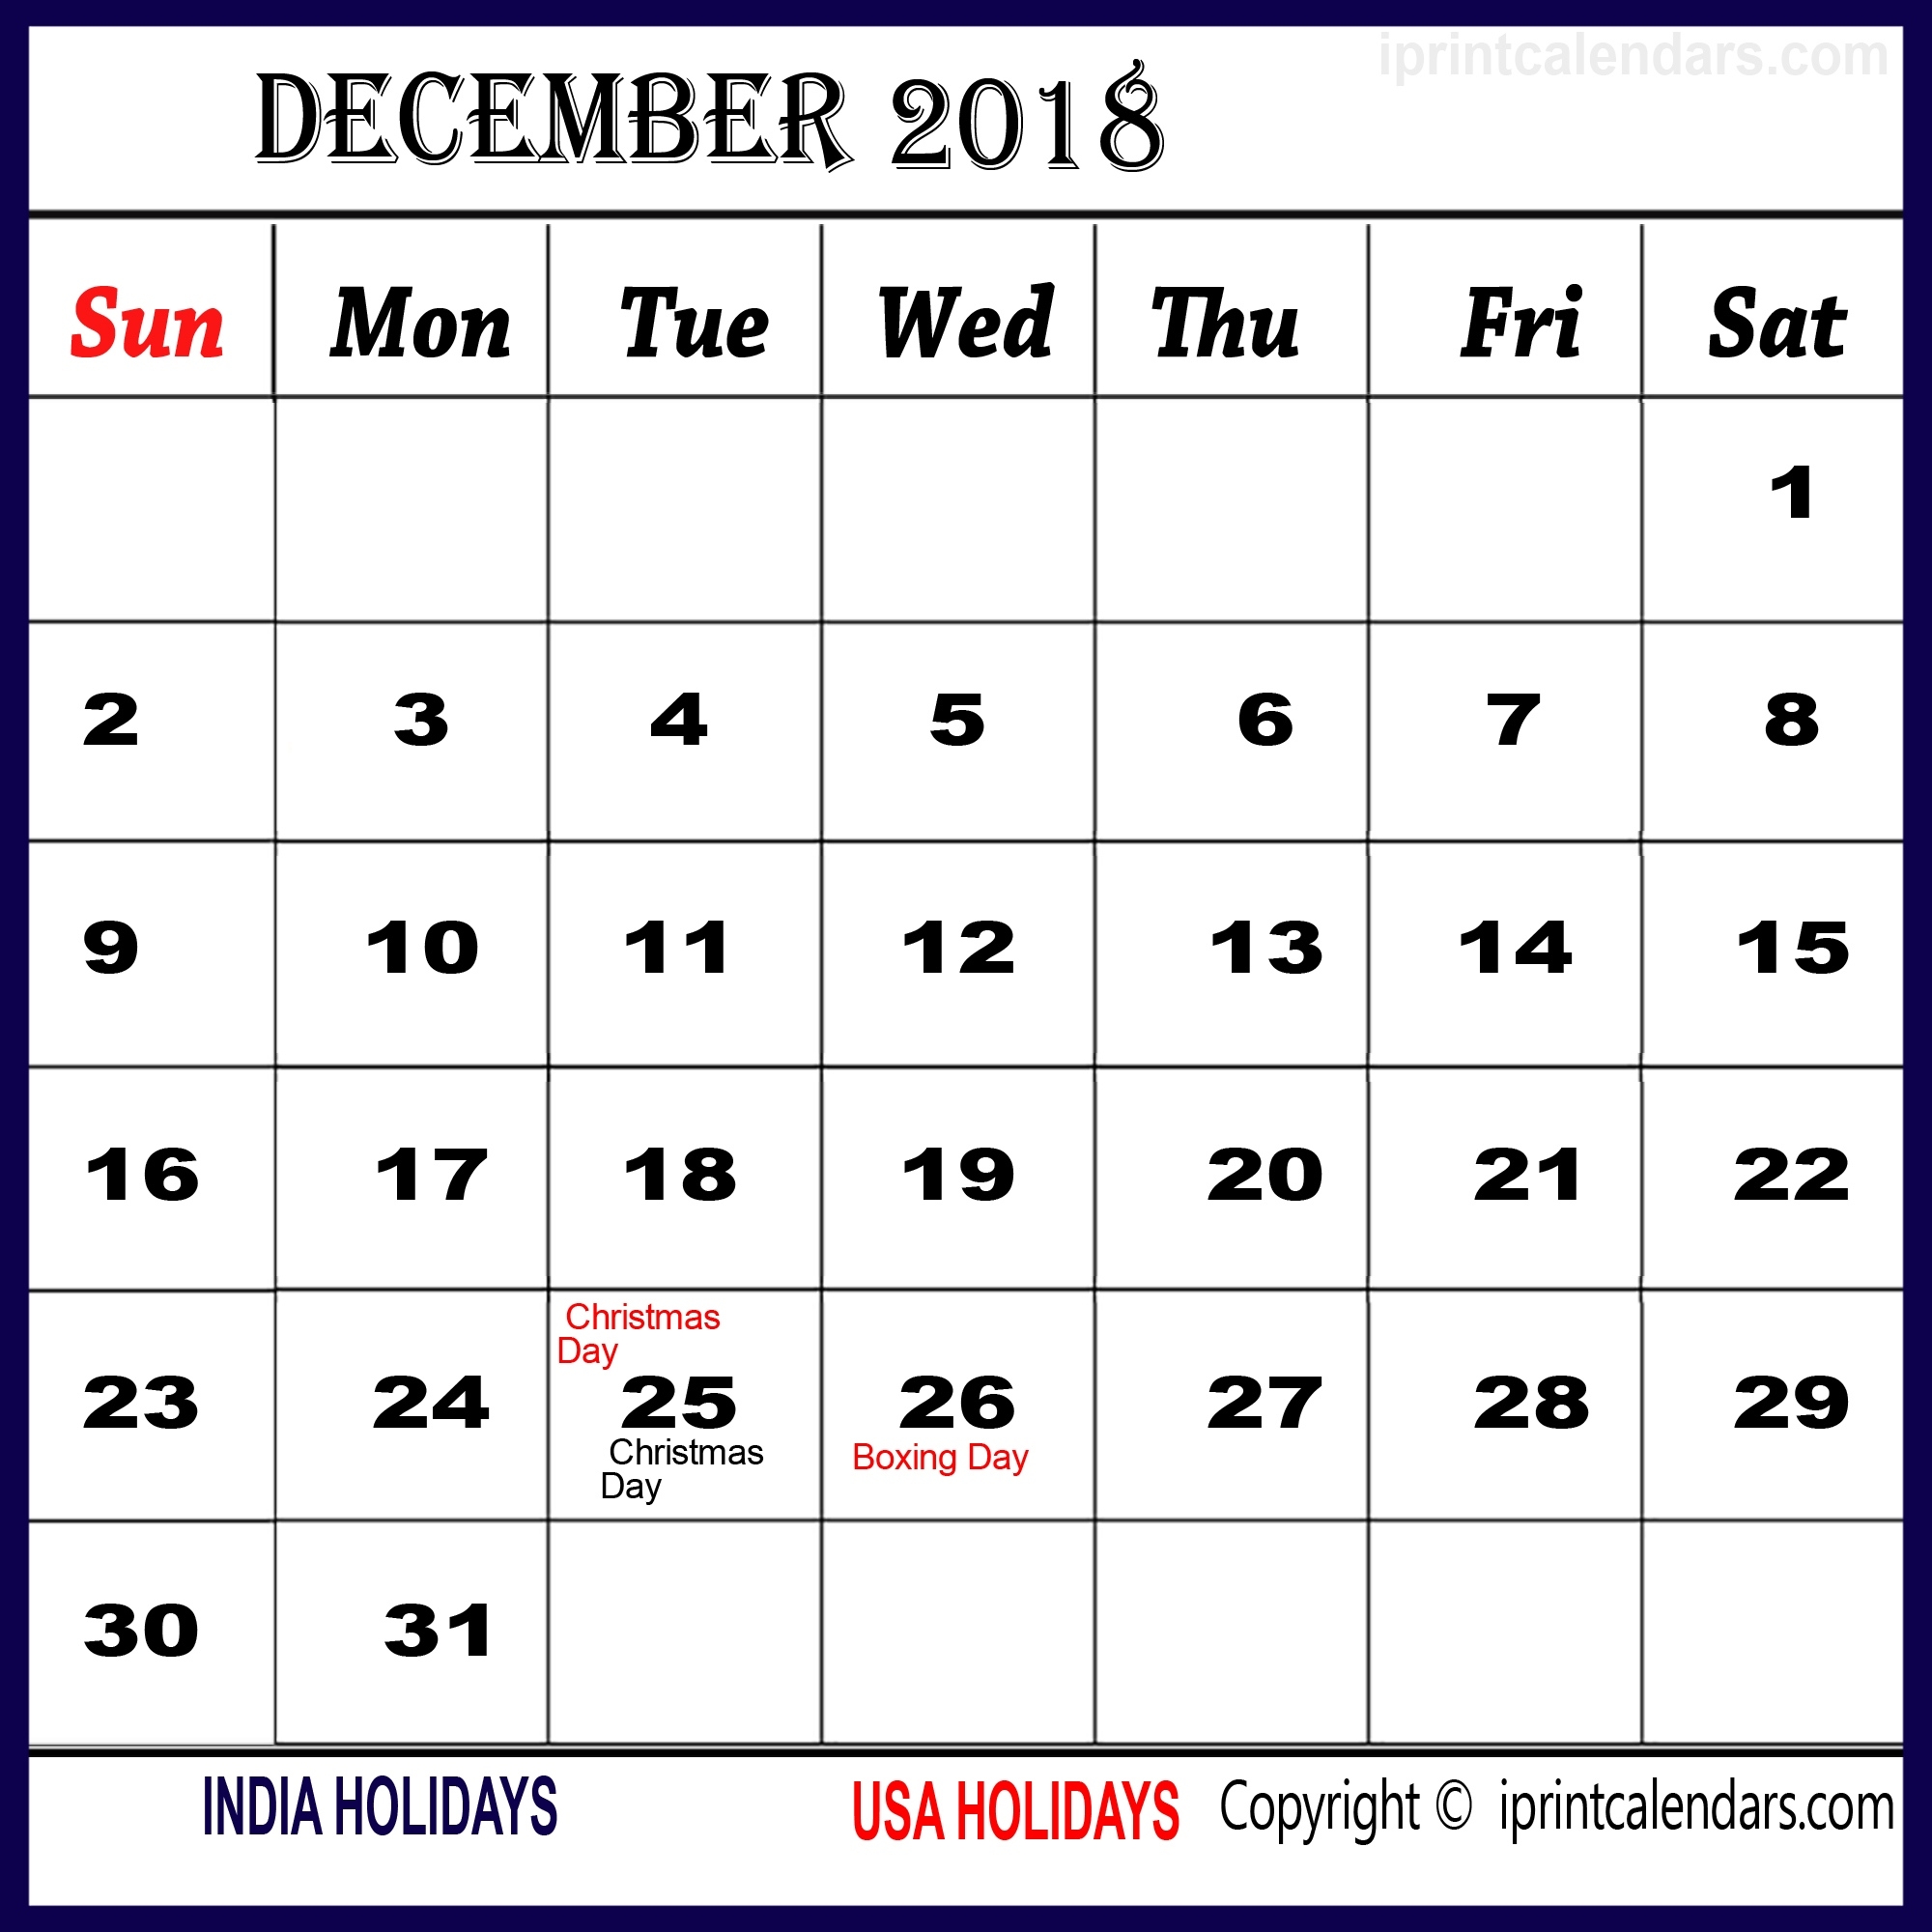 December 2018 Calendar With Holidays | Year Printable Calendar Calendar Of Holidays In December